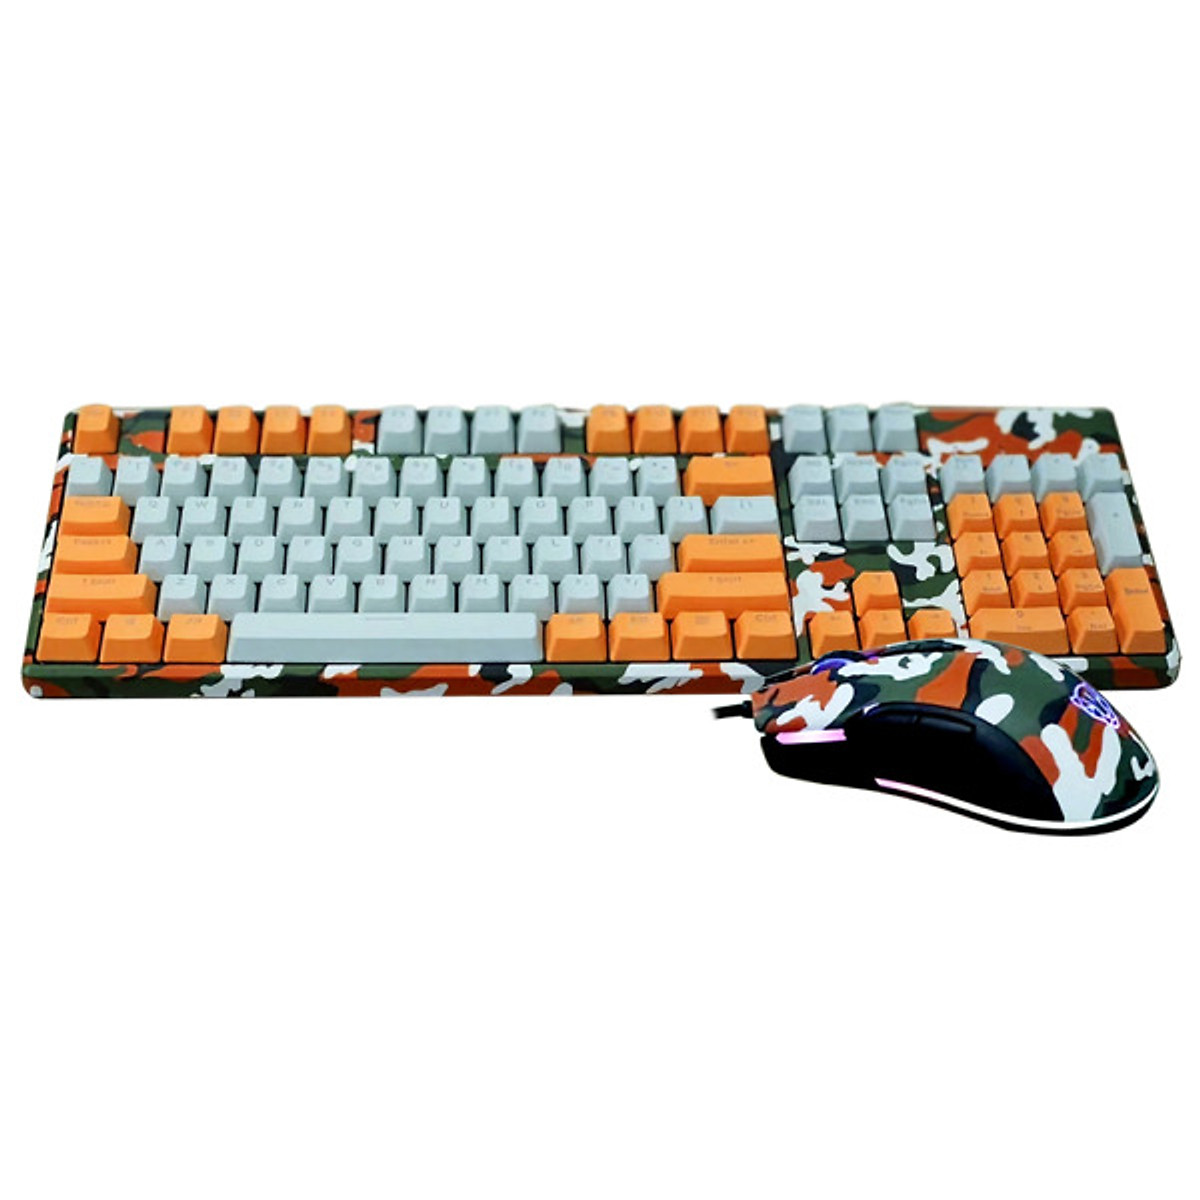 COMBO PHÍM CHUỘT Motospeed GS700 Rainbow – Gaming Keyboard & Mouse Combo (Camo Orange)